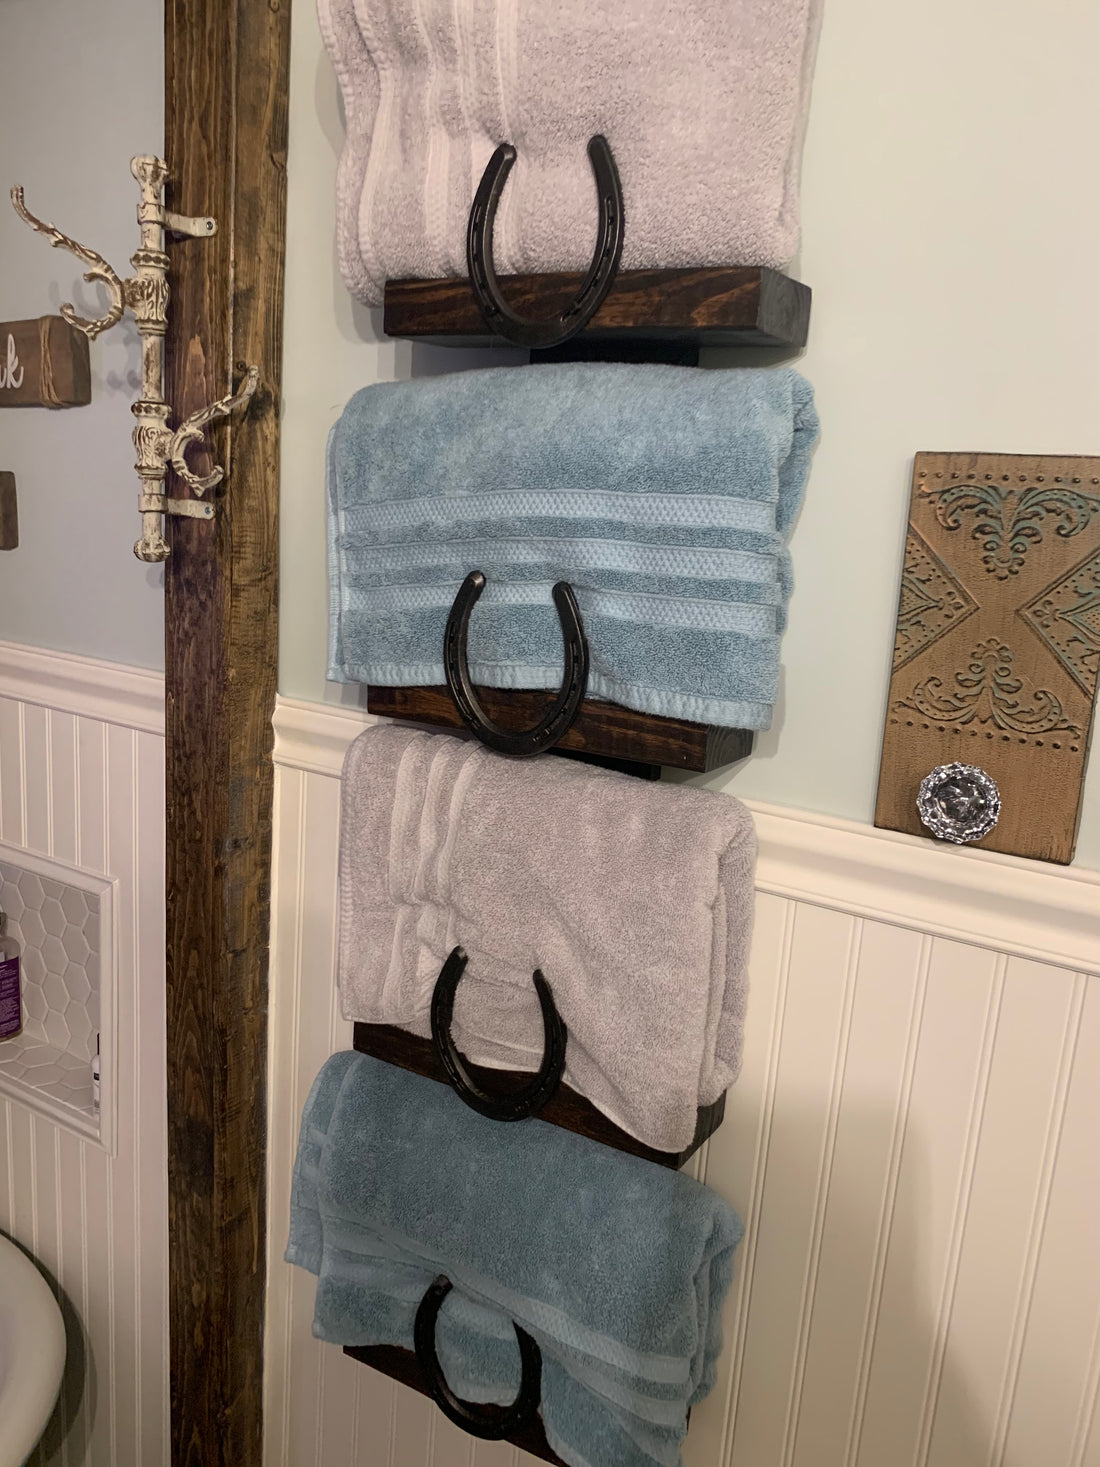 Create a Horseshoe Towel Holder for your Bathroom